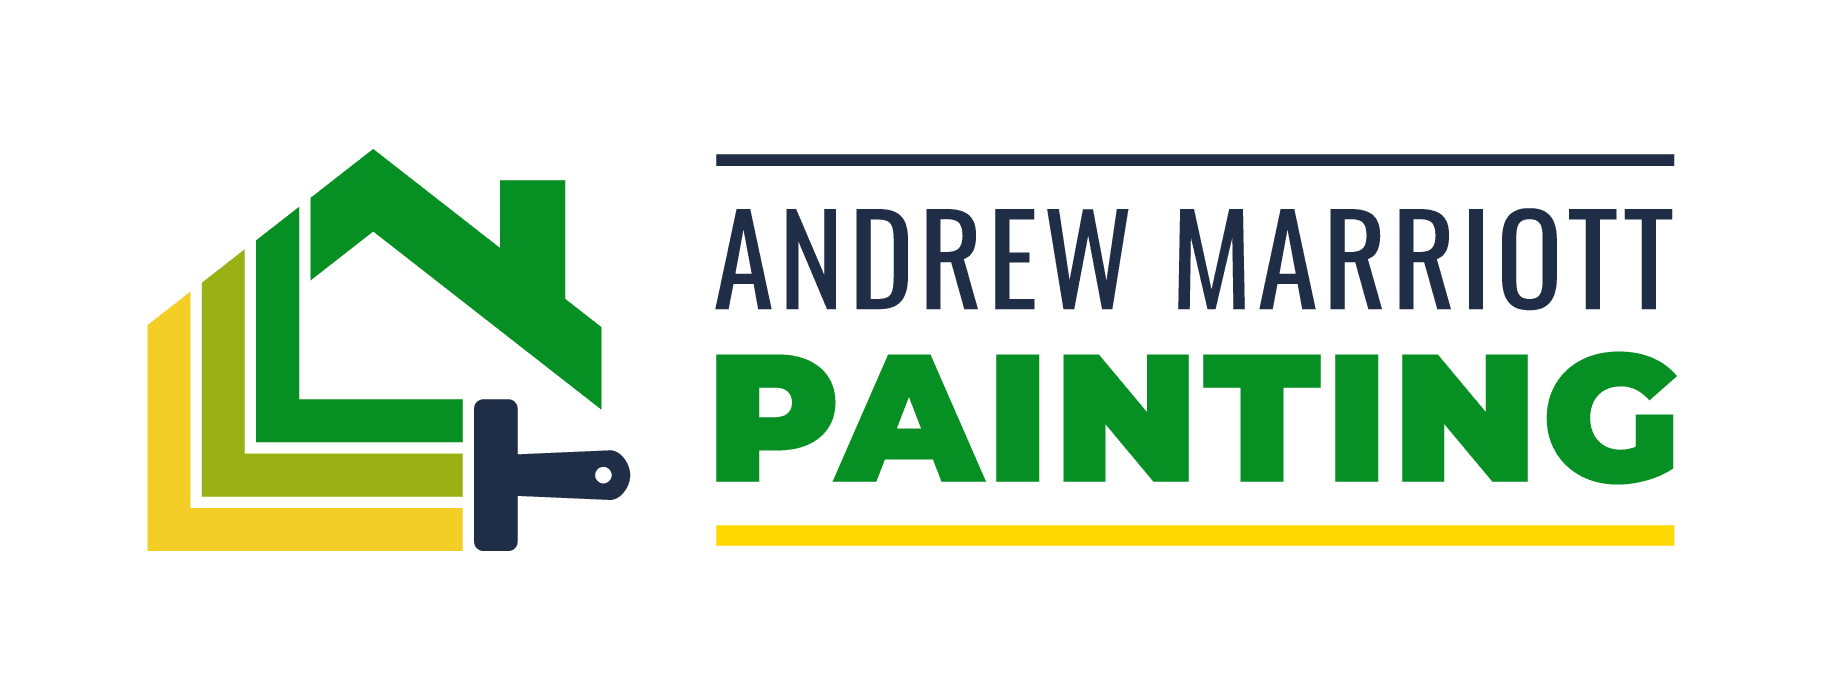 Andrew Marriott Painting